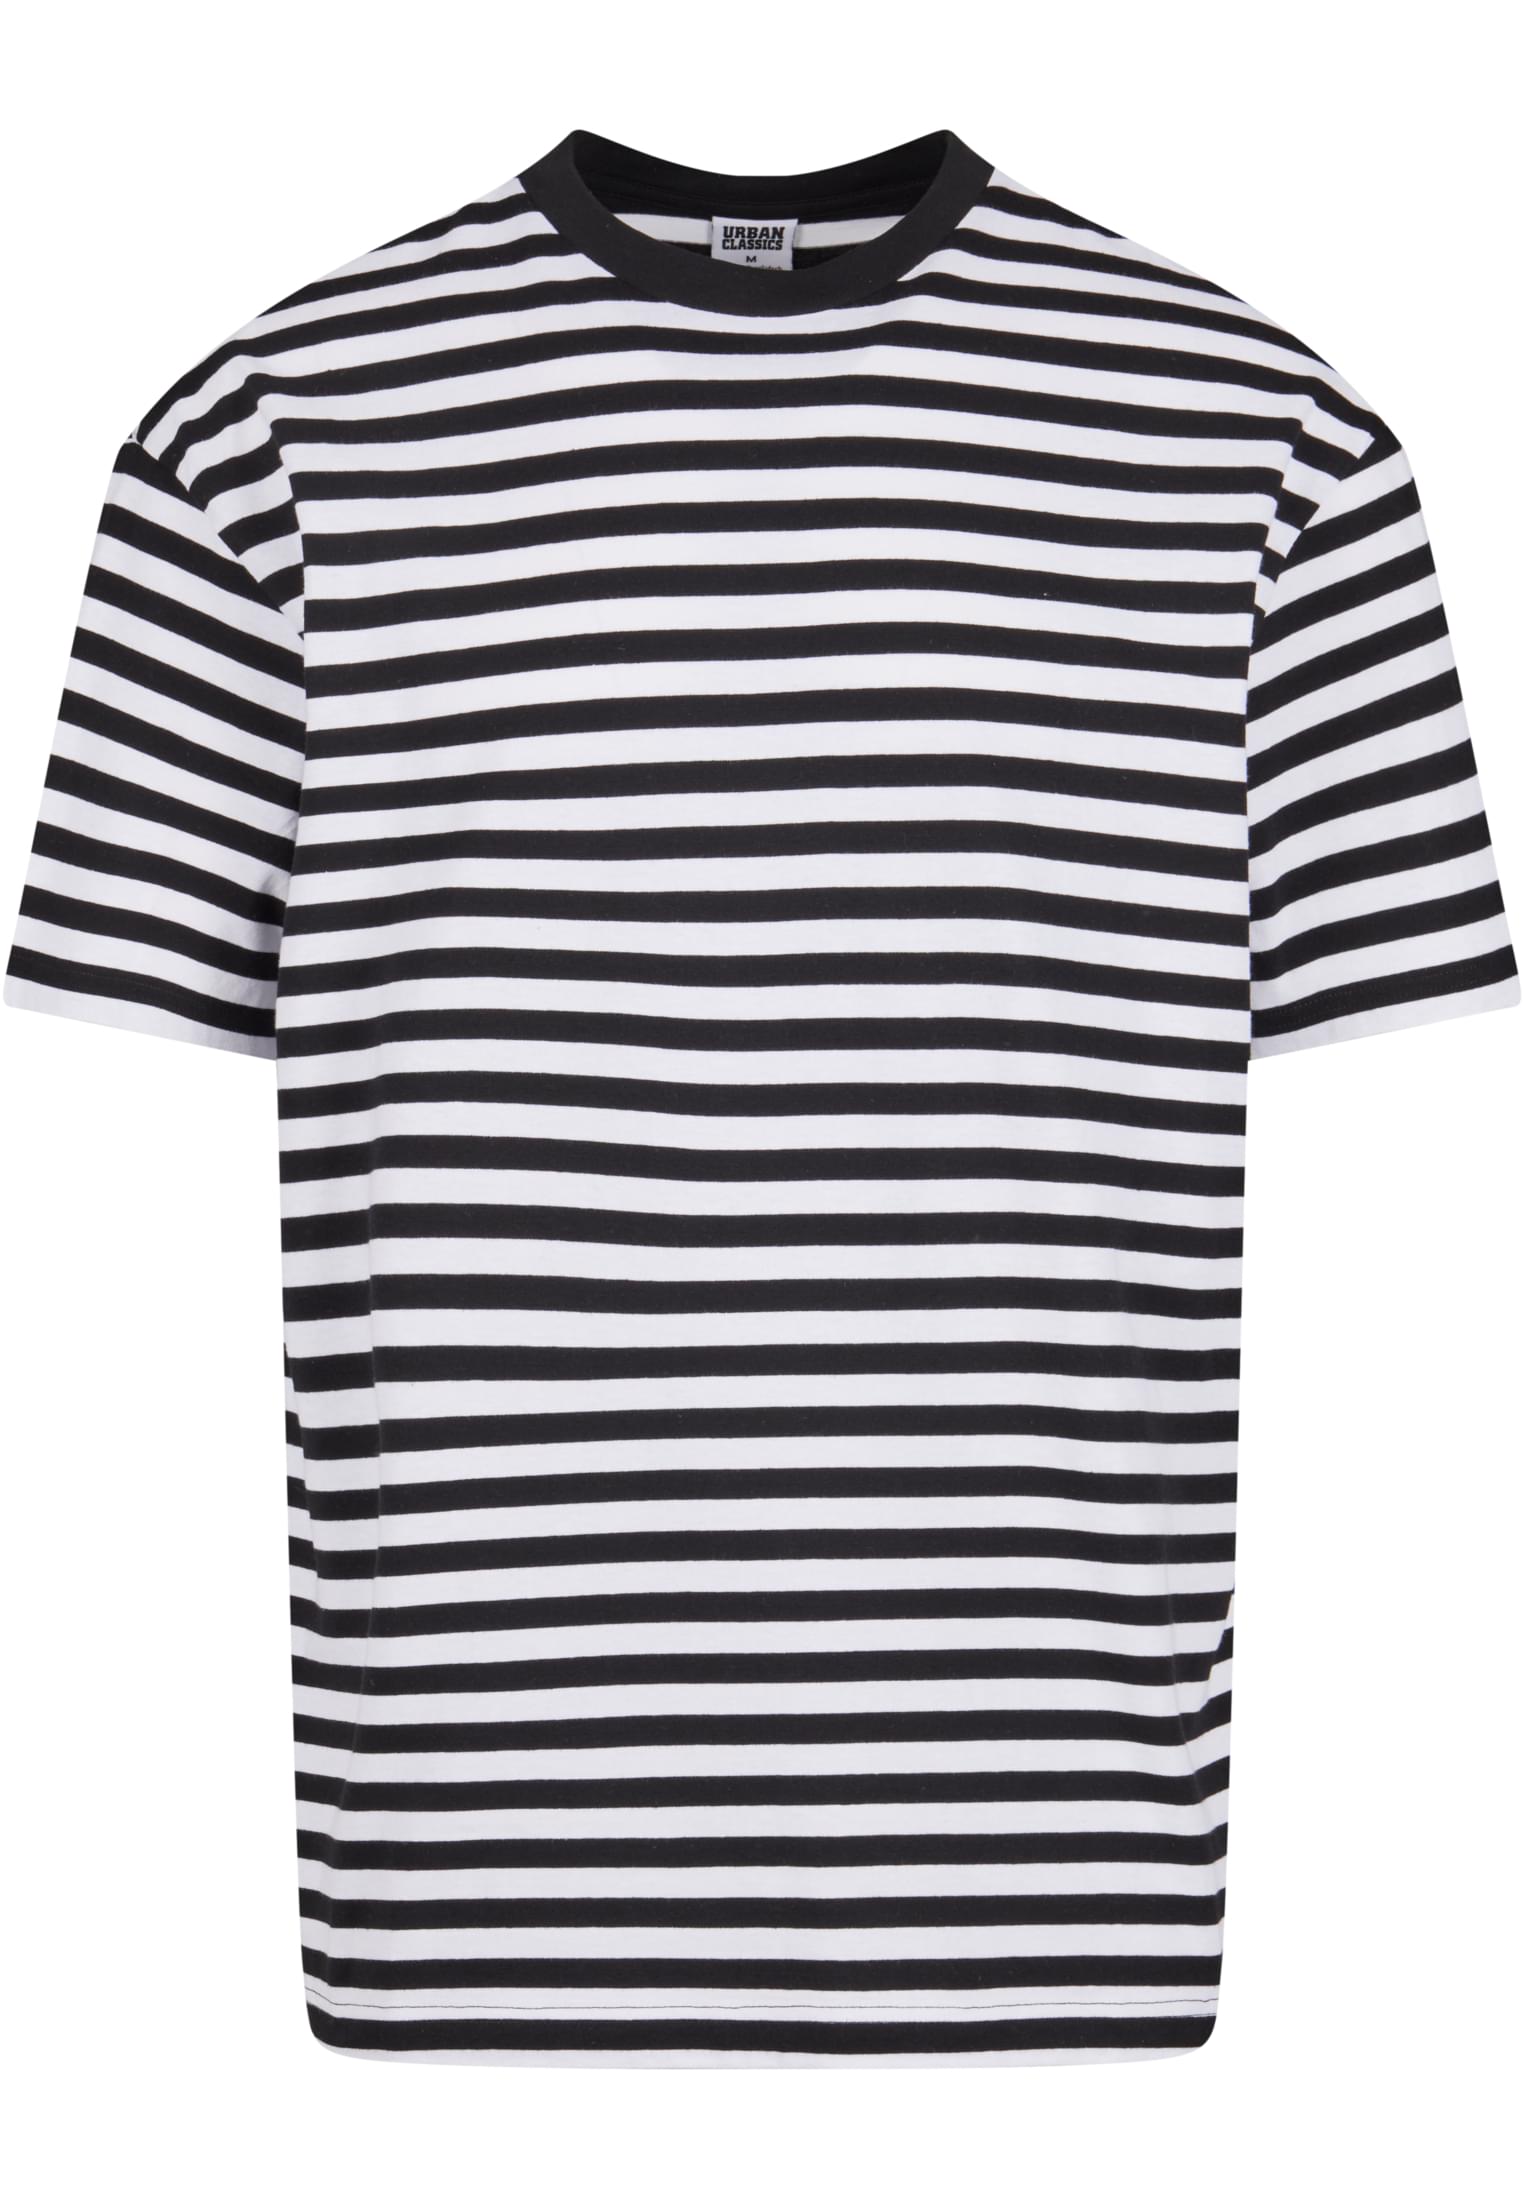 Men's T-shirt Regular Stripe white/black im Sale-uc men 1